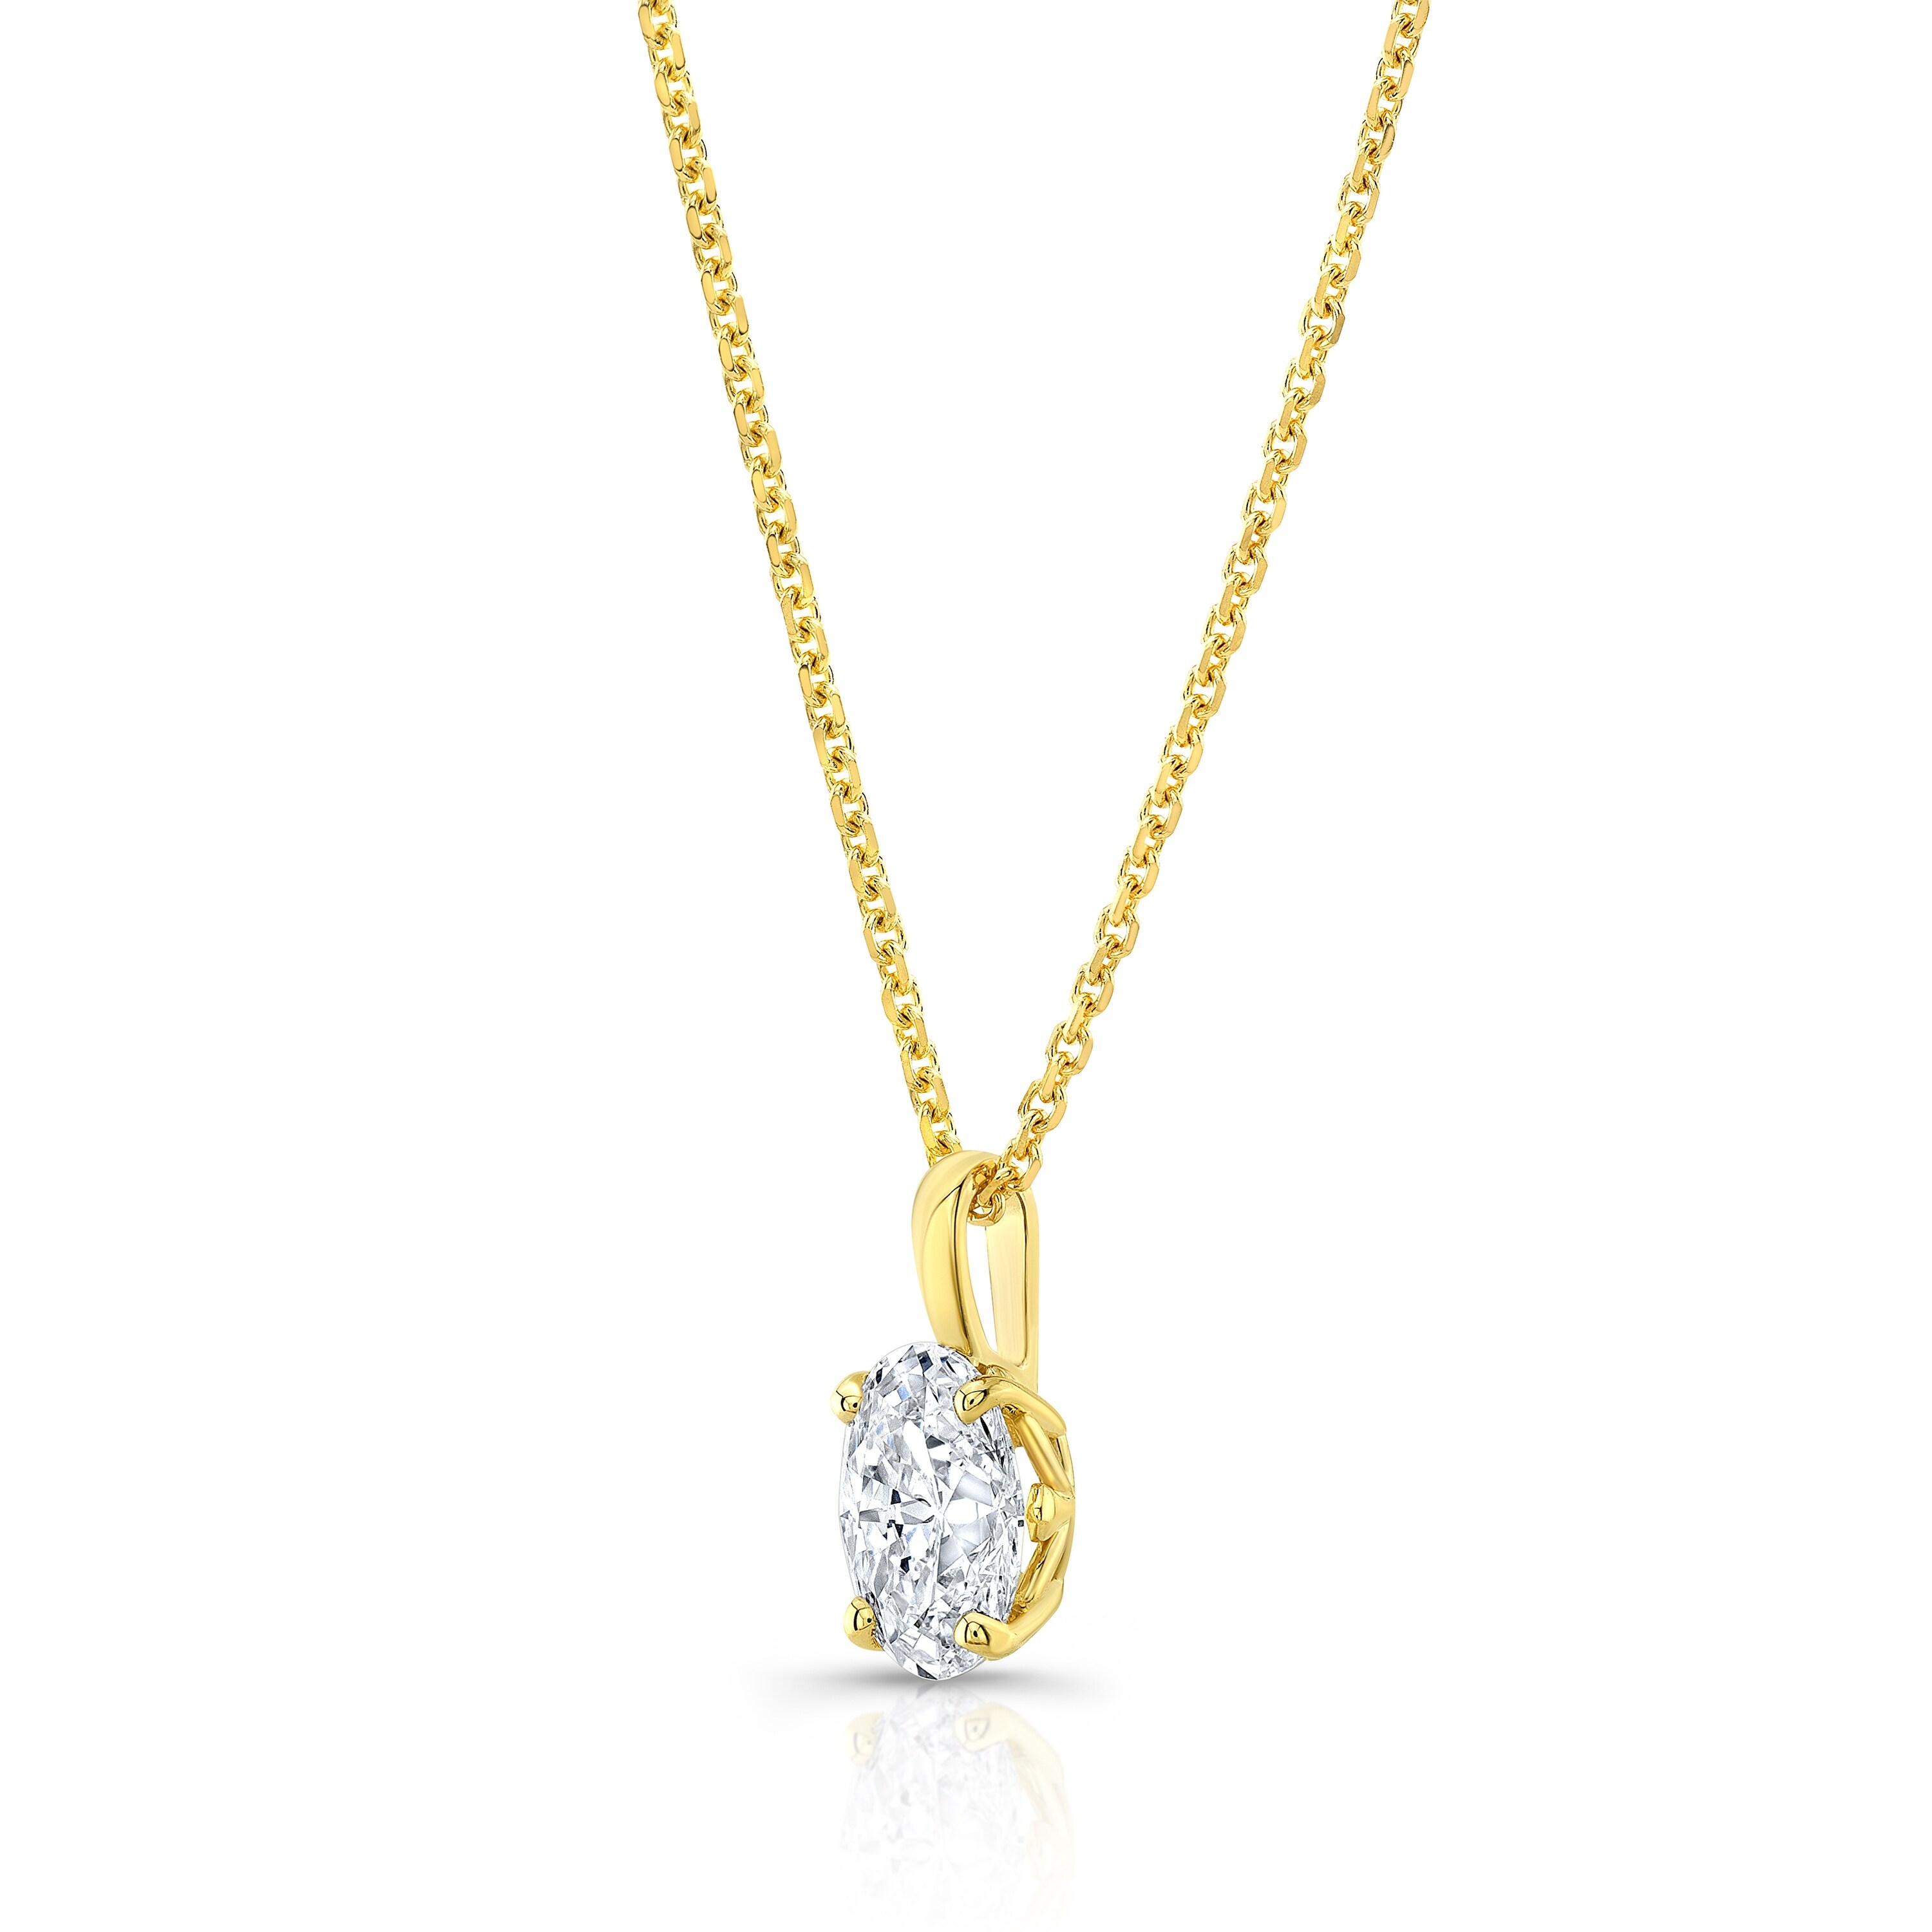 Oval Diamond Solitaire Pendant in a 14K Rose Gold Fleur De Lis Setting,  0.75ct. t.w. (HI, SI1-SI2)